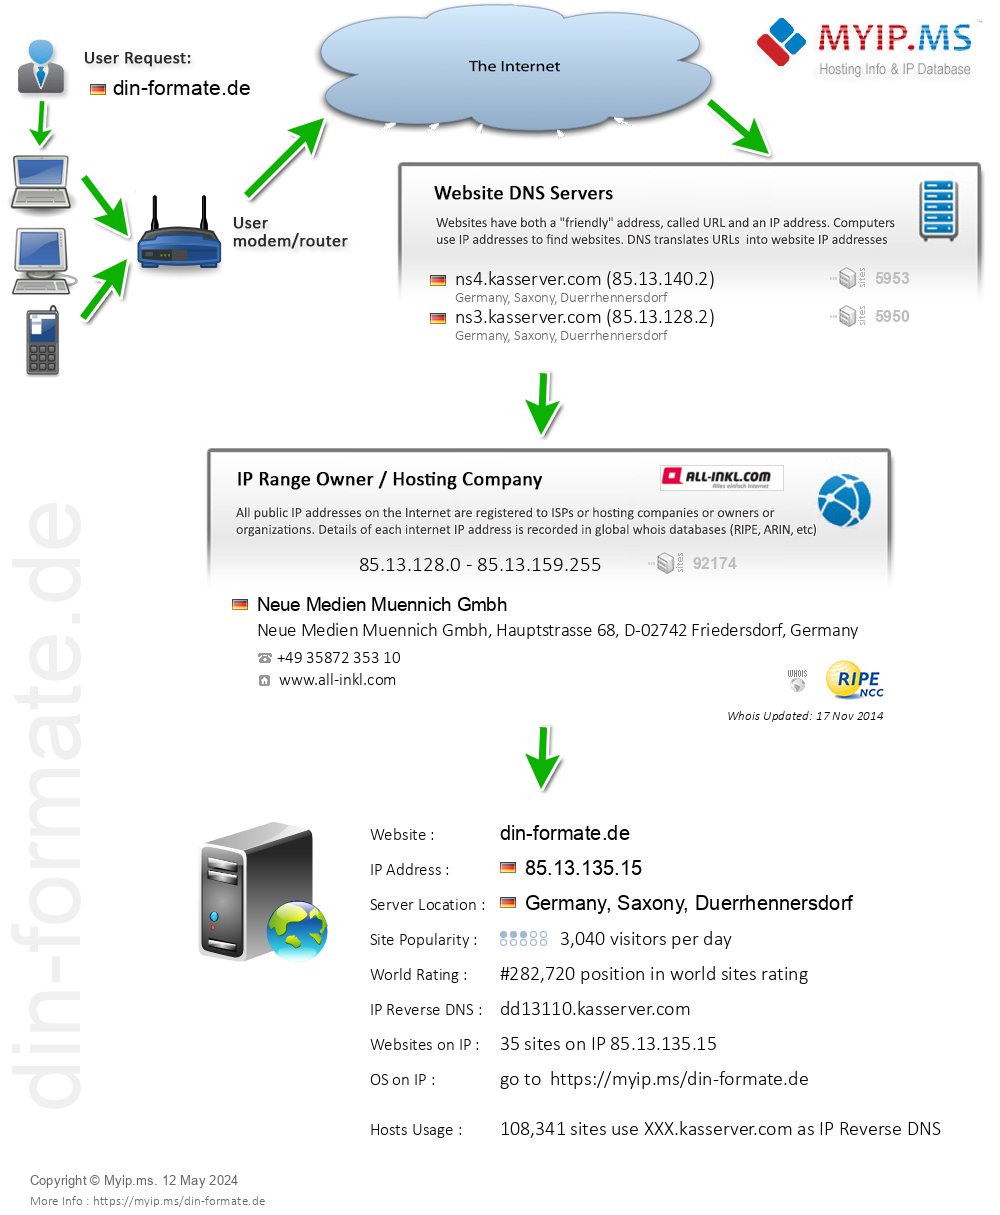 Din-formate.de - Website Hosting Visual IP Diagram